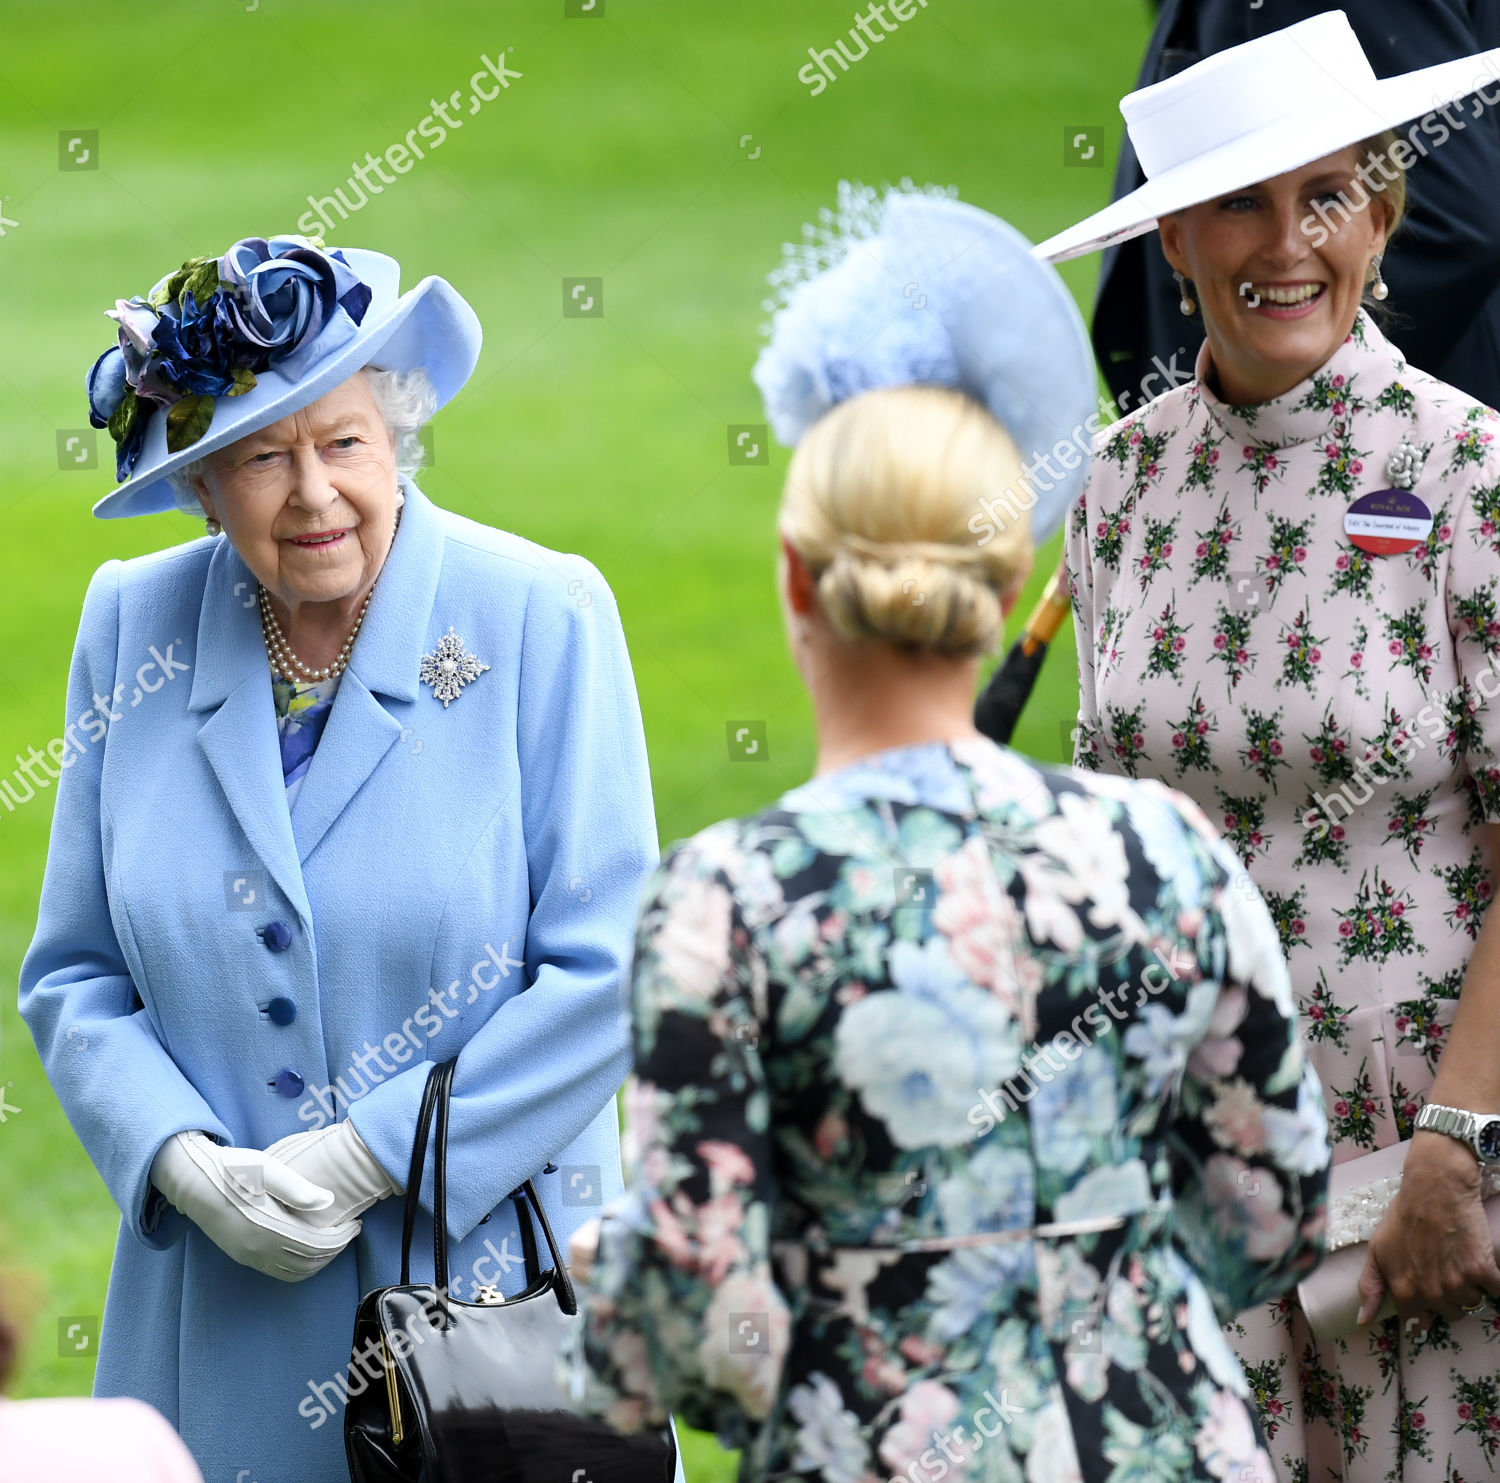 royal-ascot-day-1-uk-18-jun-2019-shutterstock-editorial-10314326cr.jpg